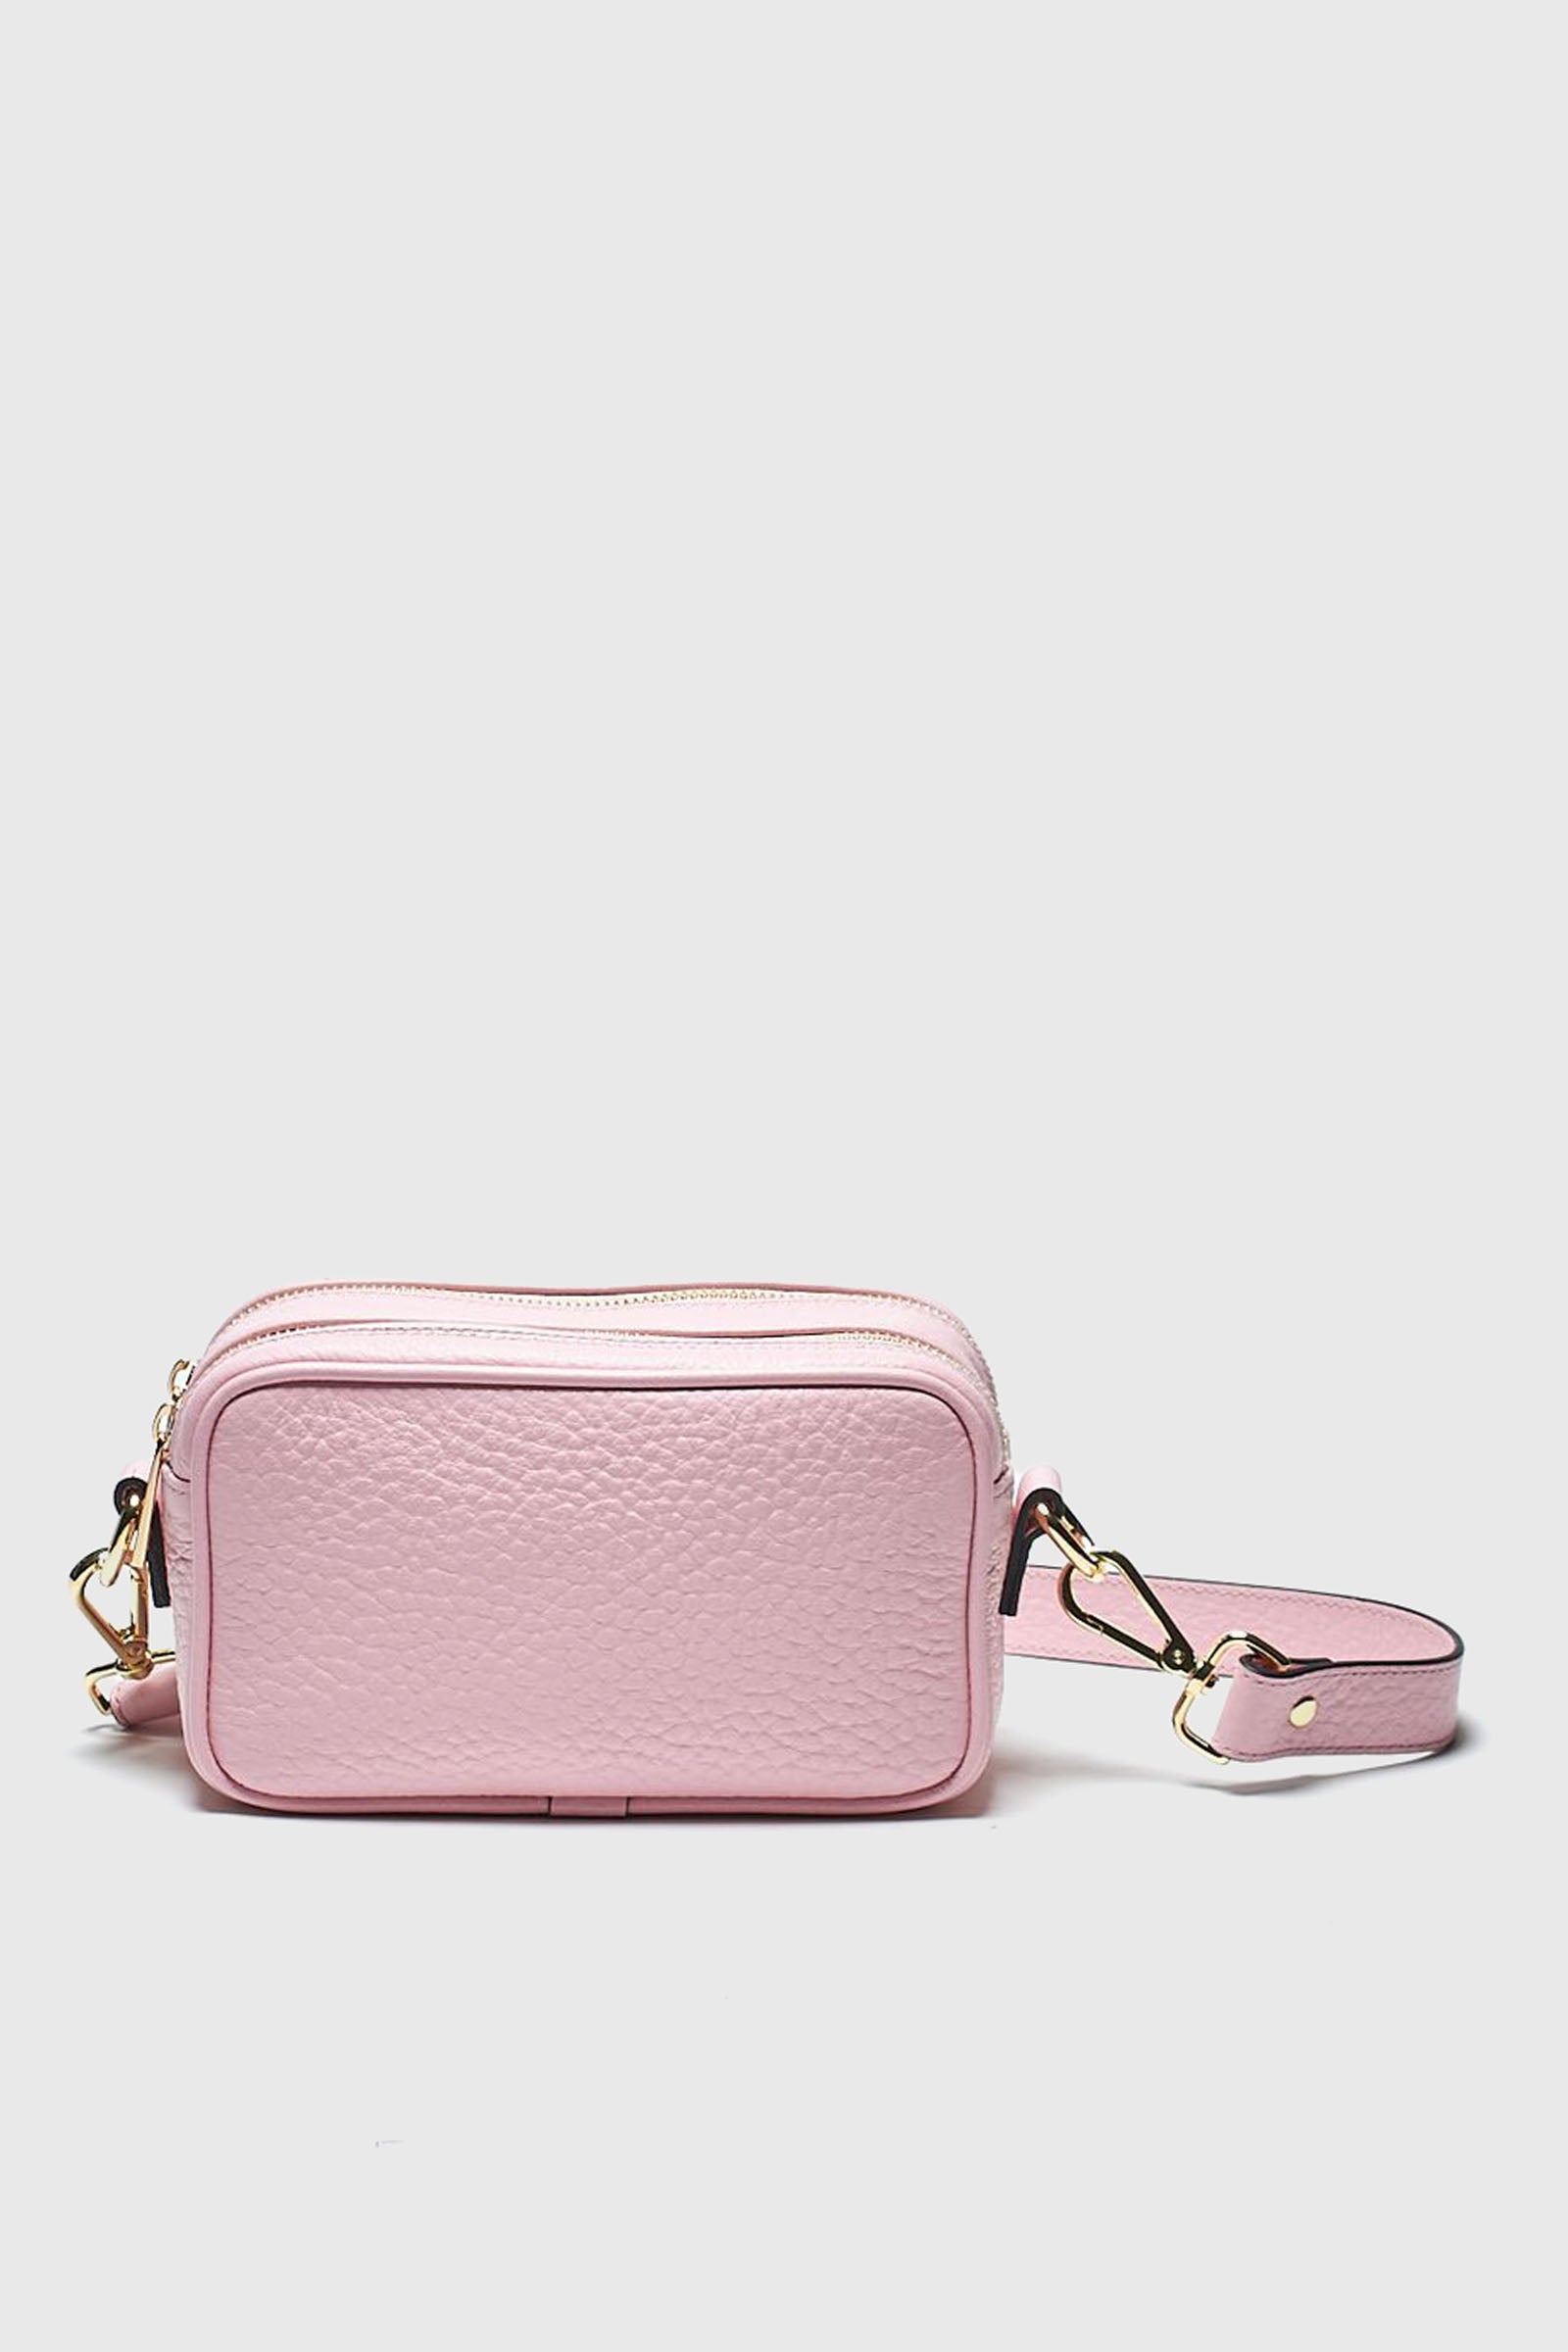 Avenue 67 Gabrielle Leather Bag Pink - 4